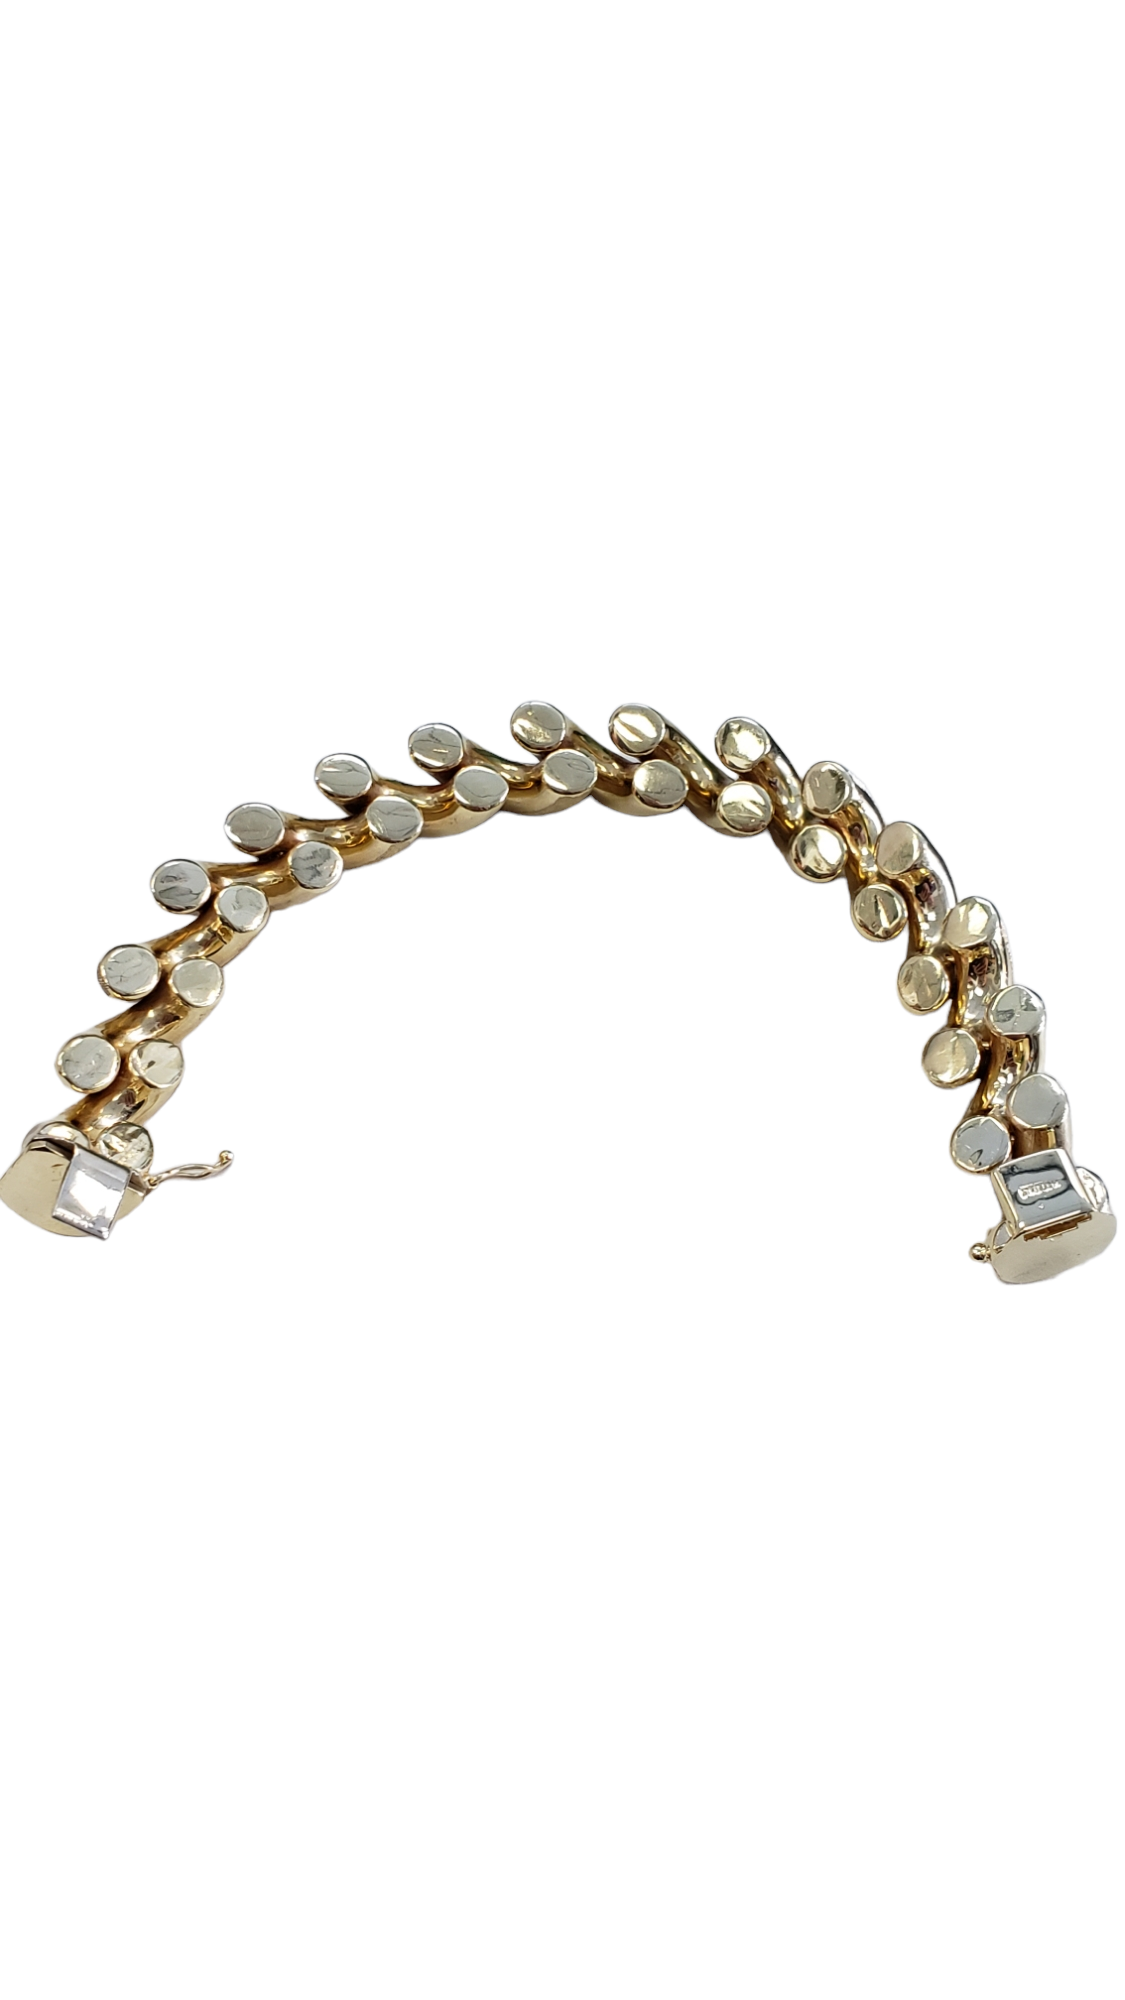 San Marco/Macaroni Style Link with alternating texturing Women's Bracelet made in 14-Karat Yellow Gold